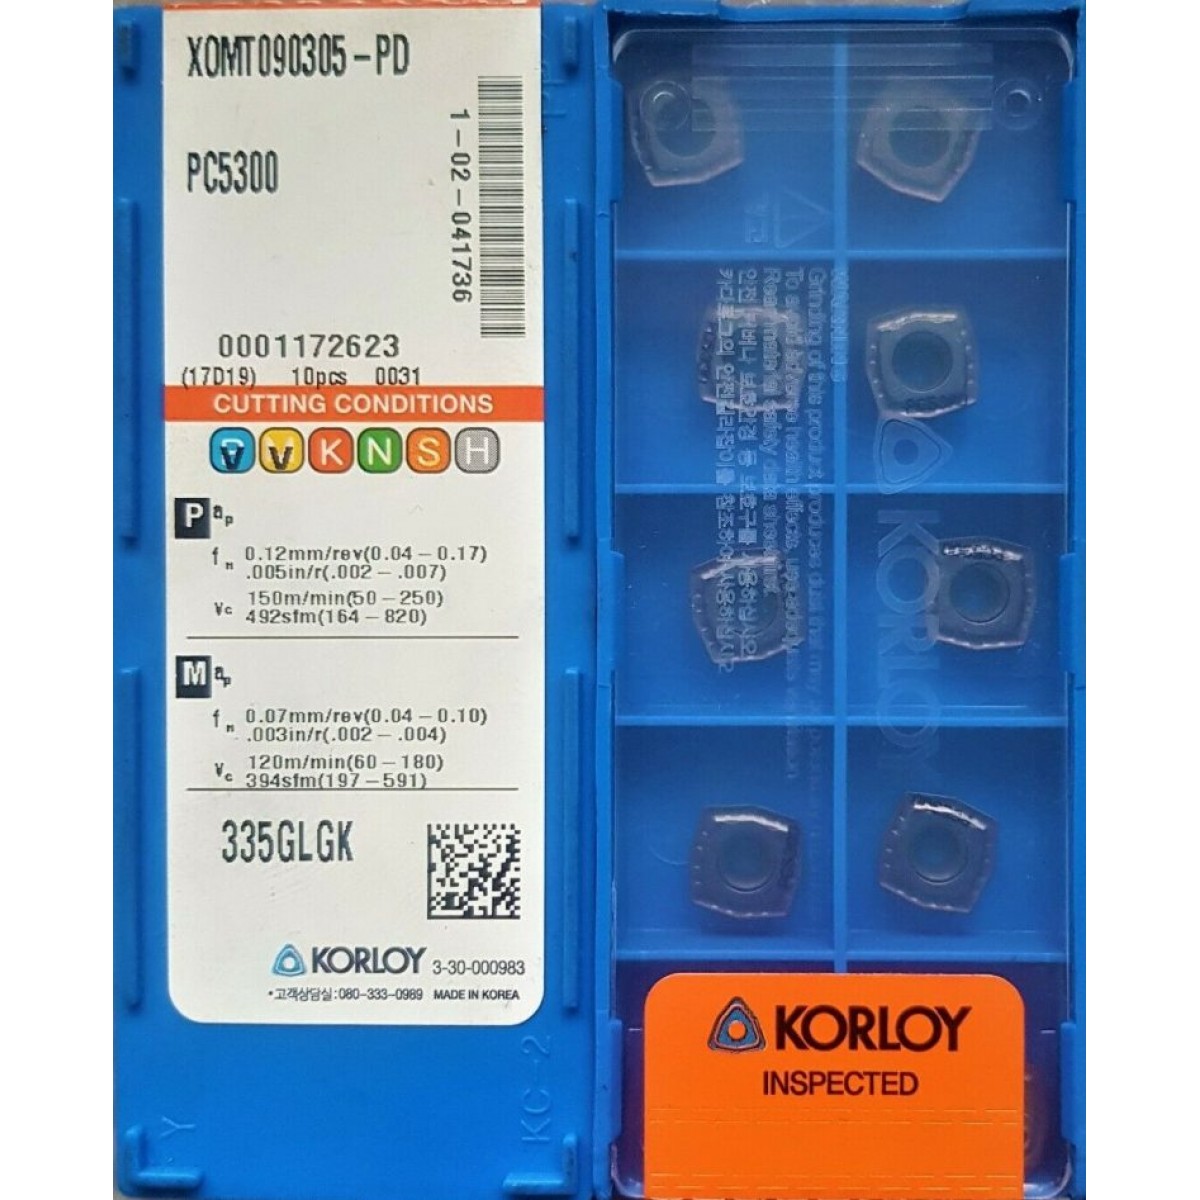 KORLOY - XOMT090305-PD PC5300